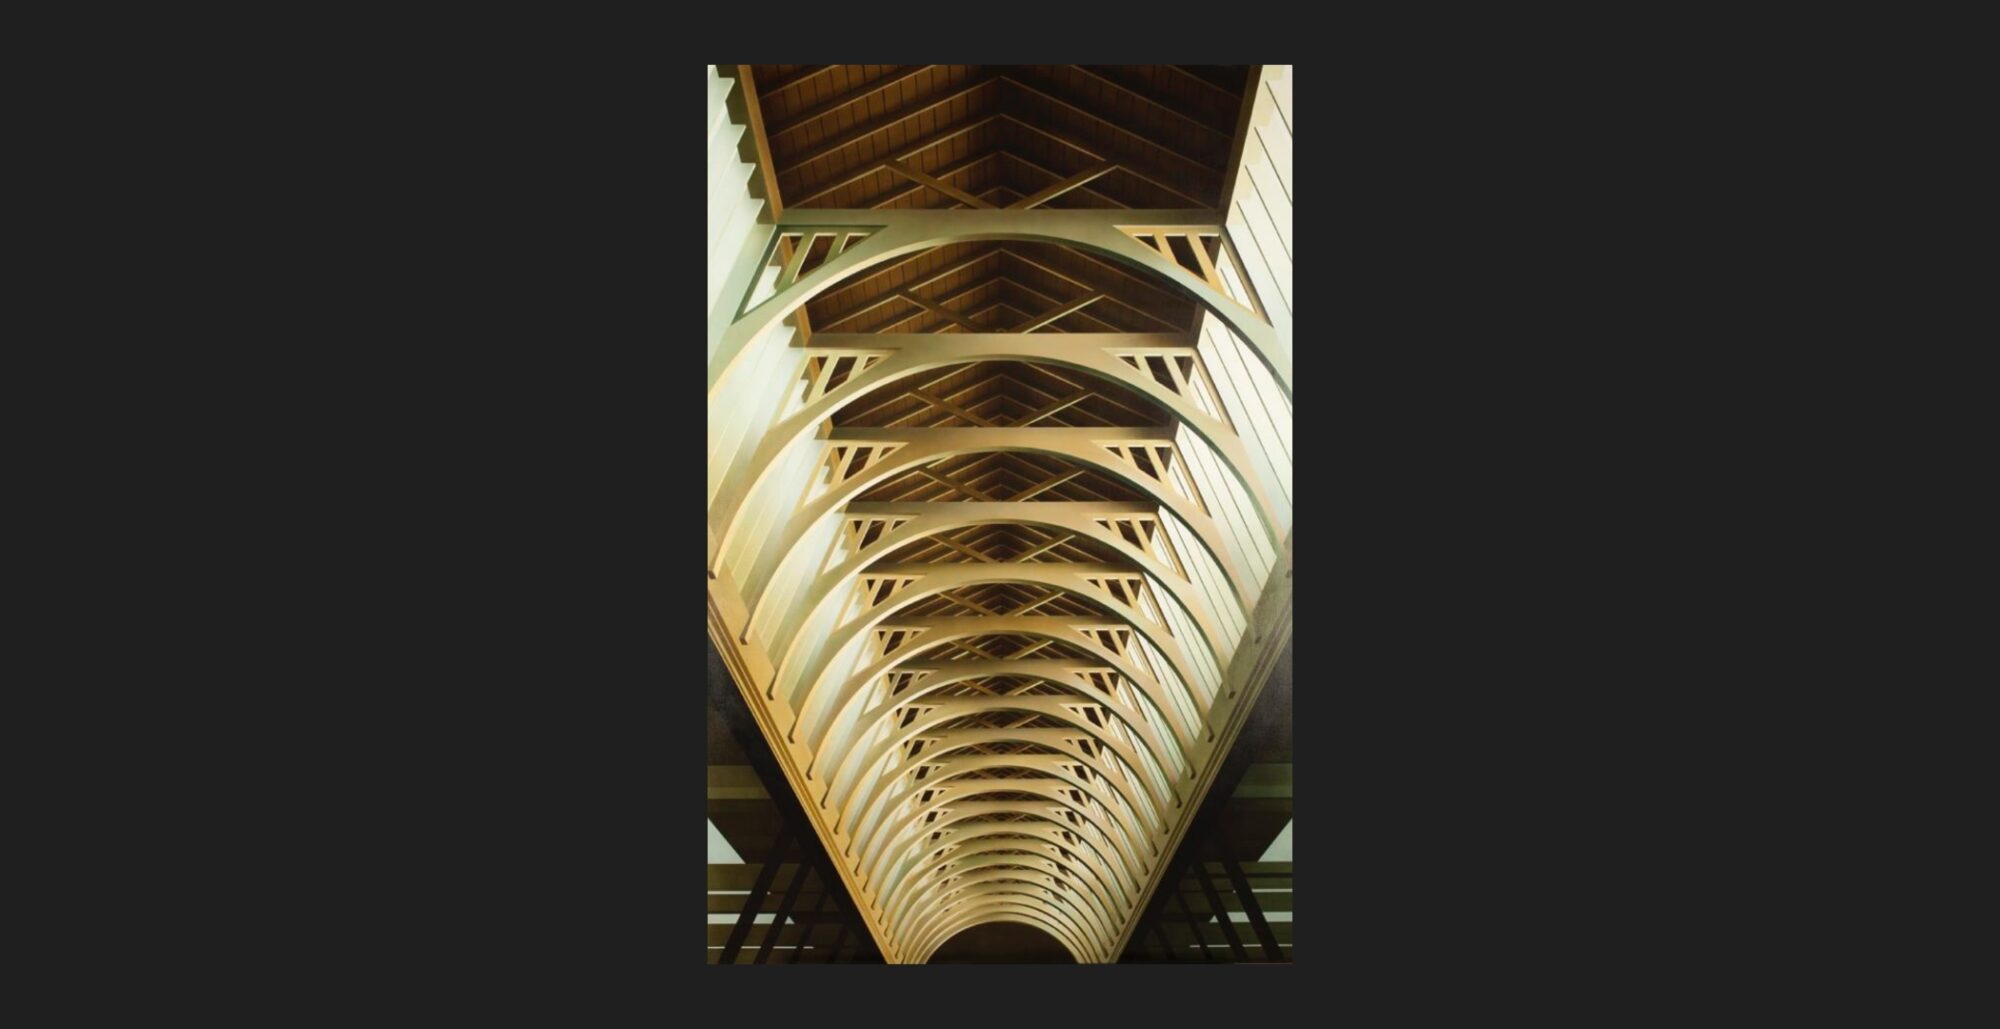 'Market Arcade', Ben Johnson (1986) - an image of a vaulted ceiling